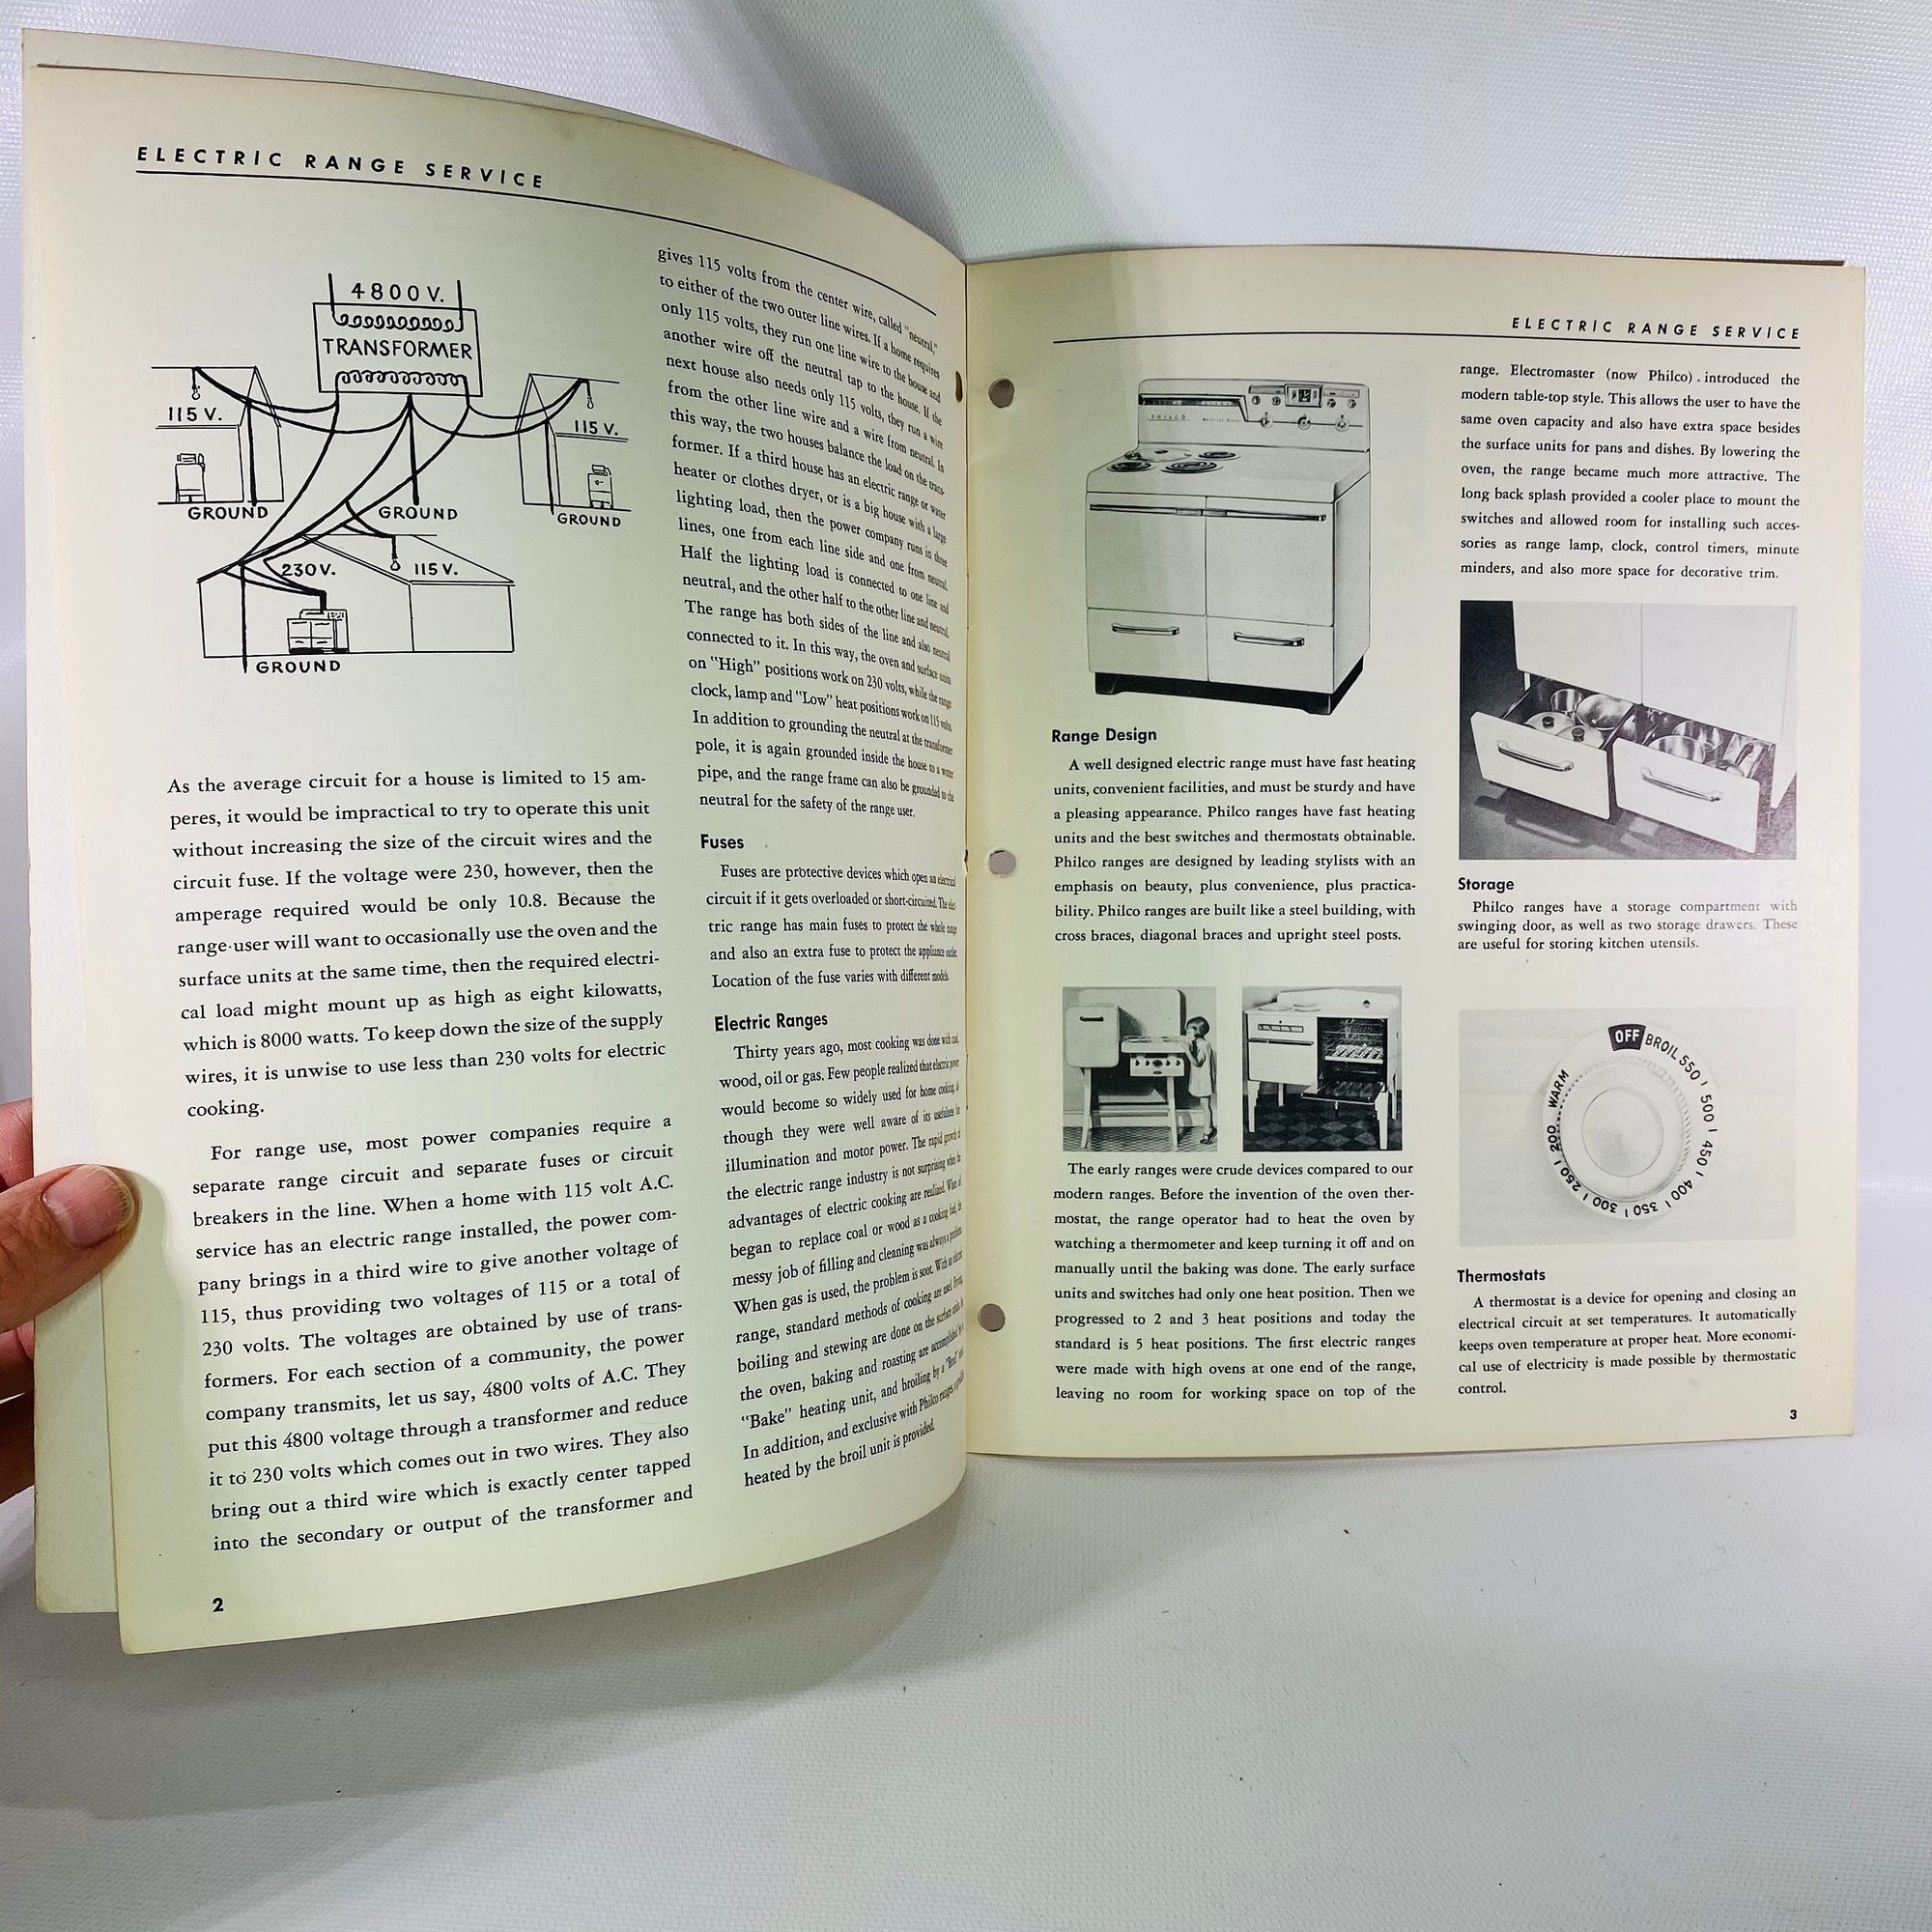 Philco Range Handbook with General Instructions PR-2134 Vol One 1951 Philco Corporation